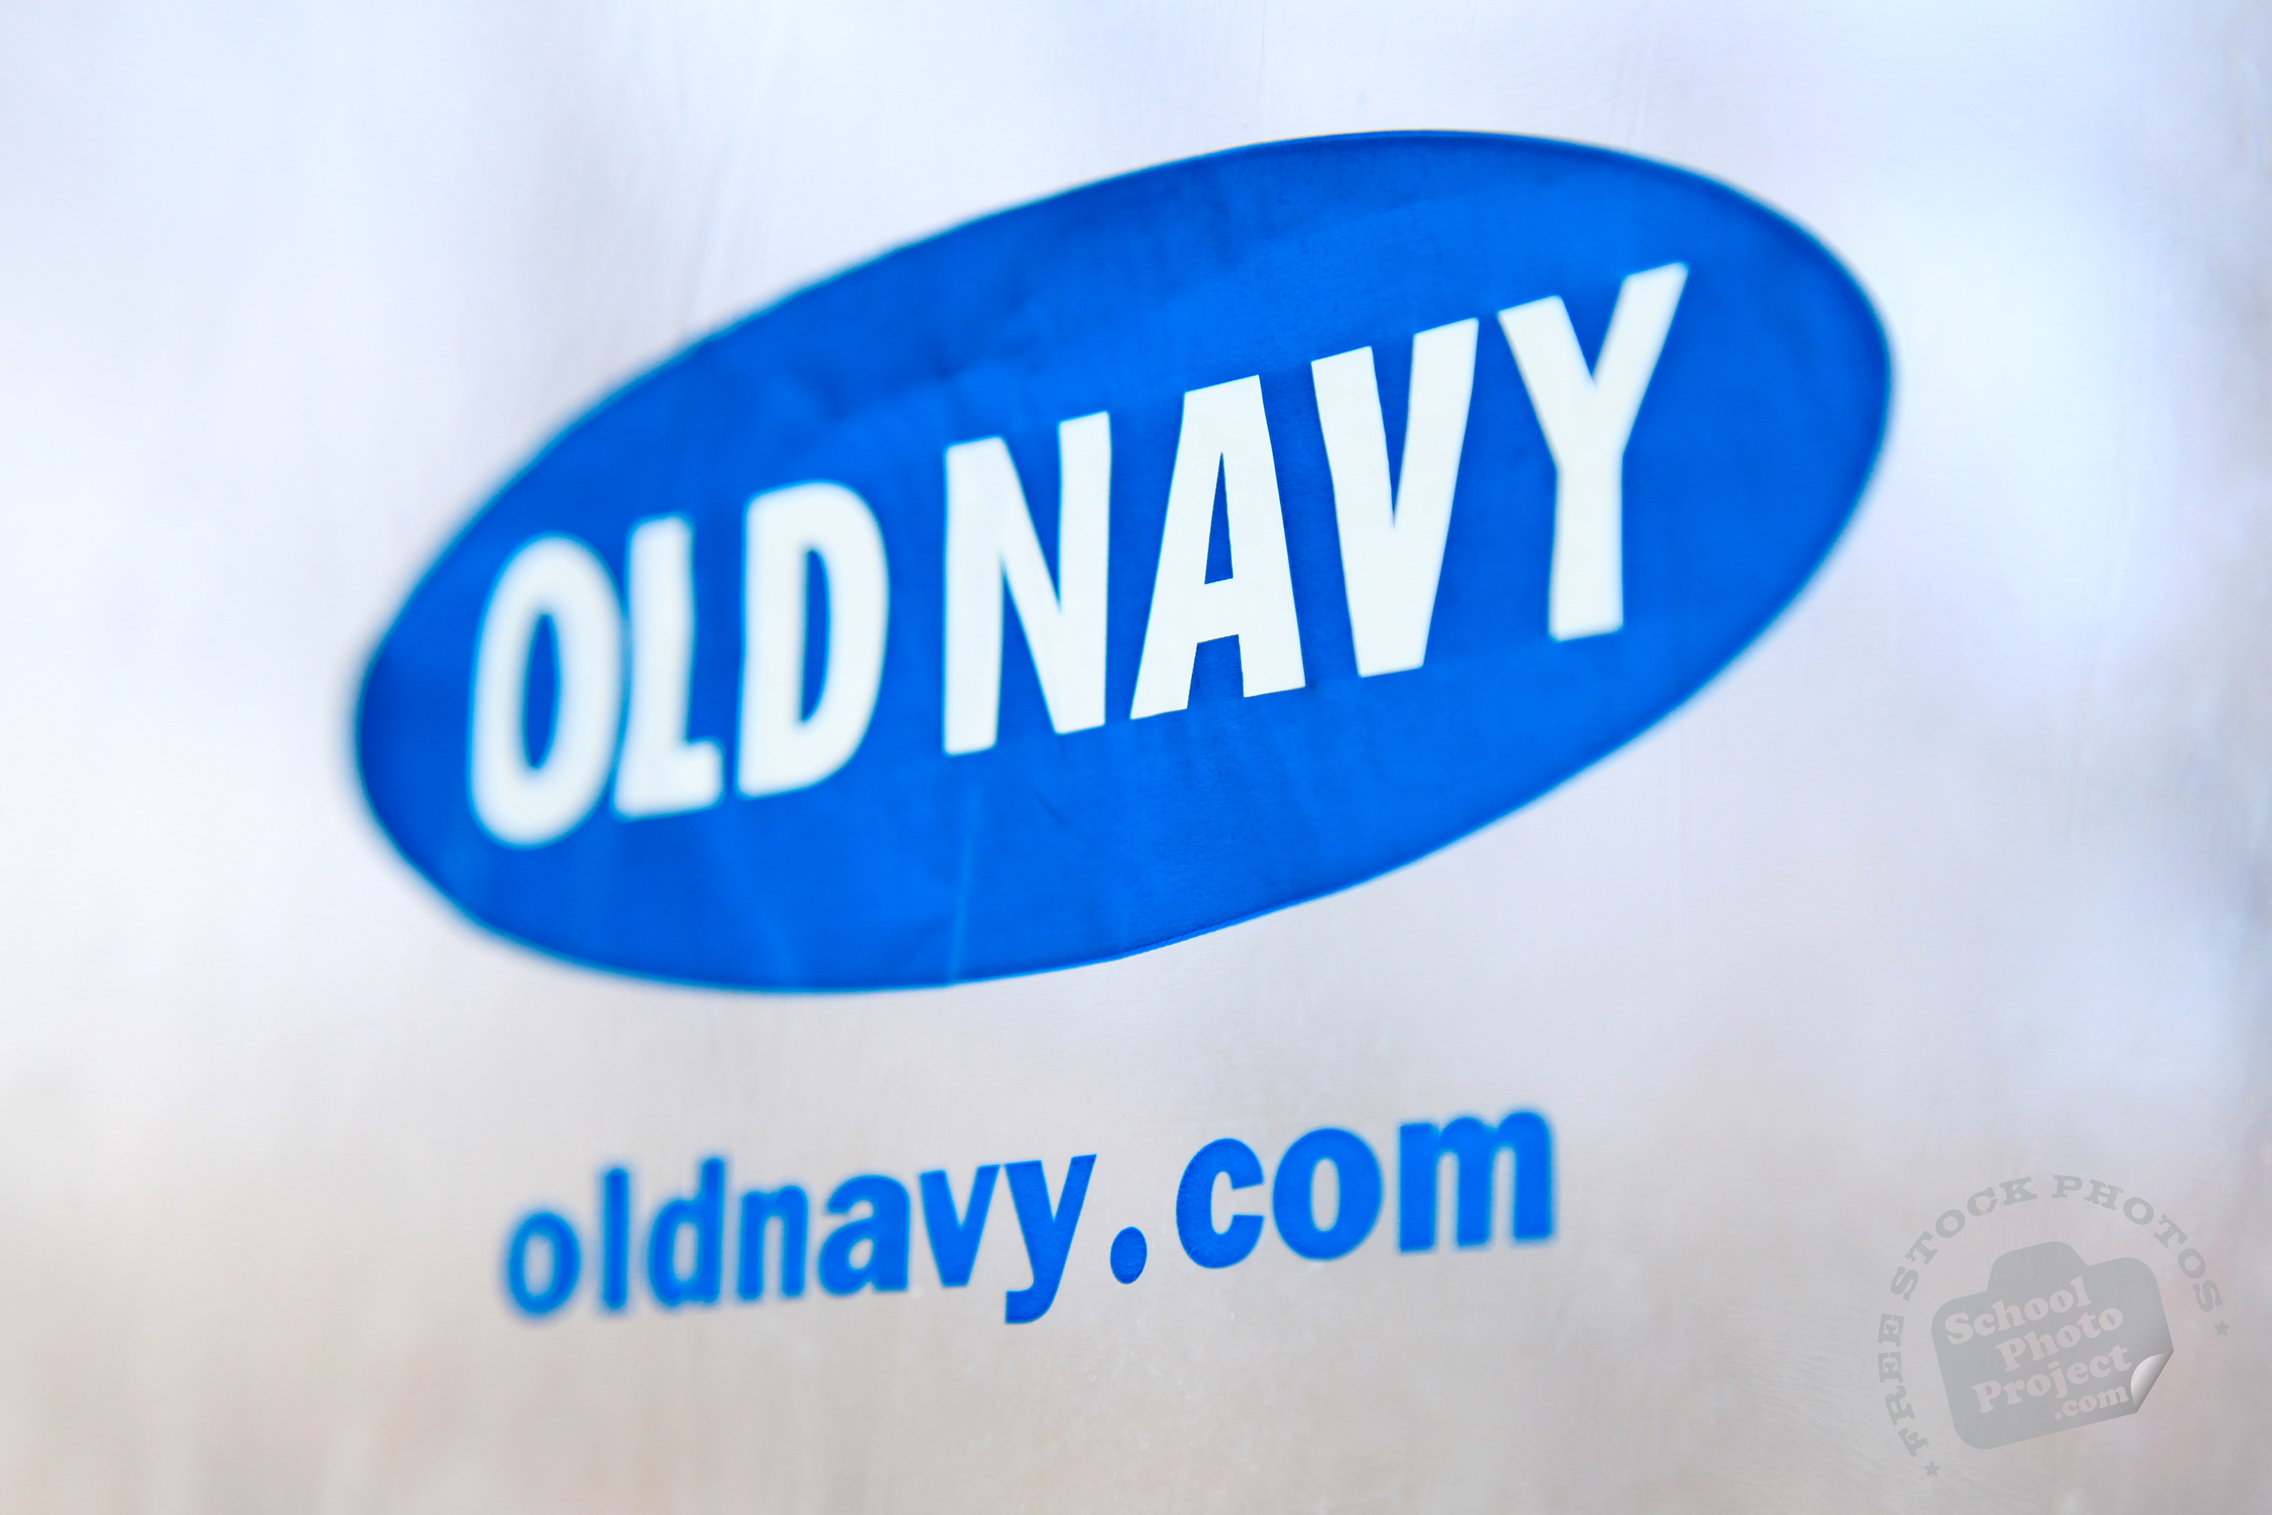 FREE Old Navy Logo Mark, Old Navy Identity, Popular Company's Brand